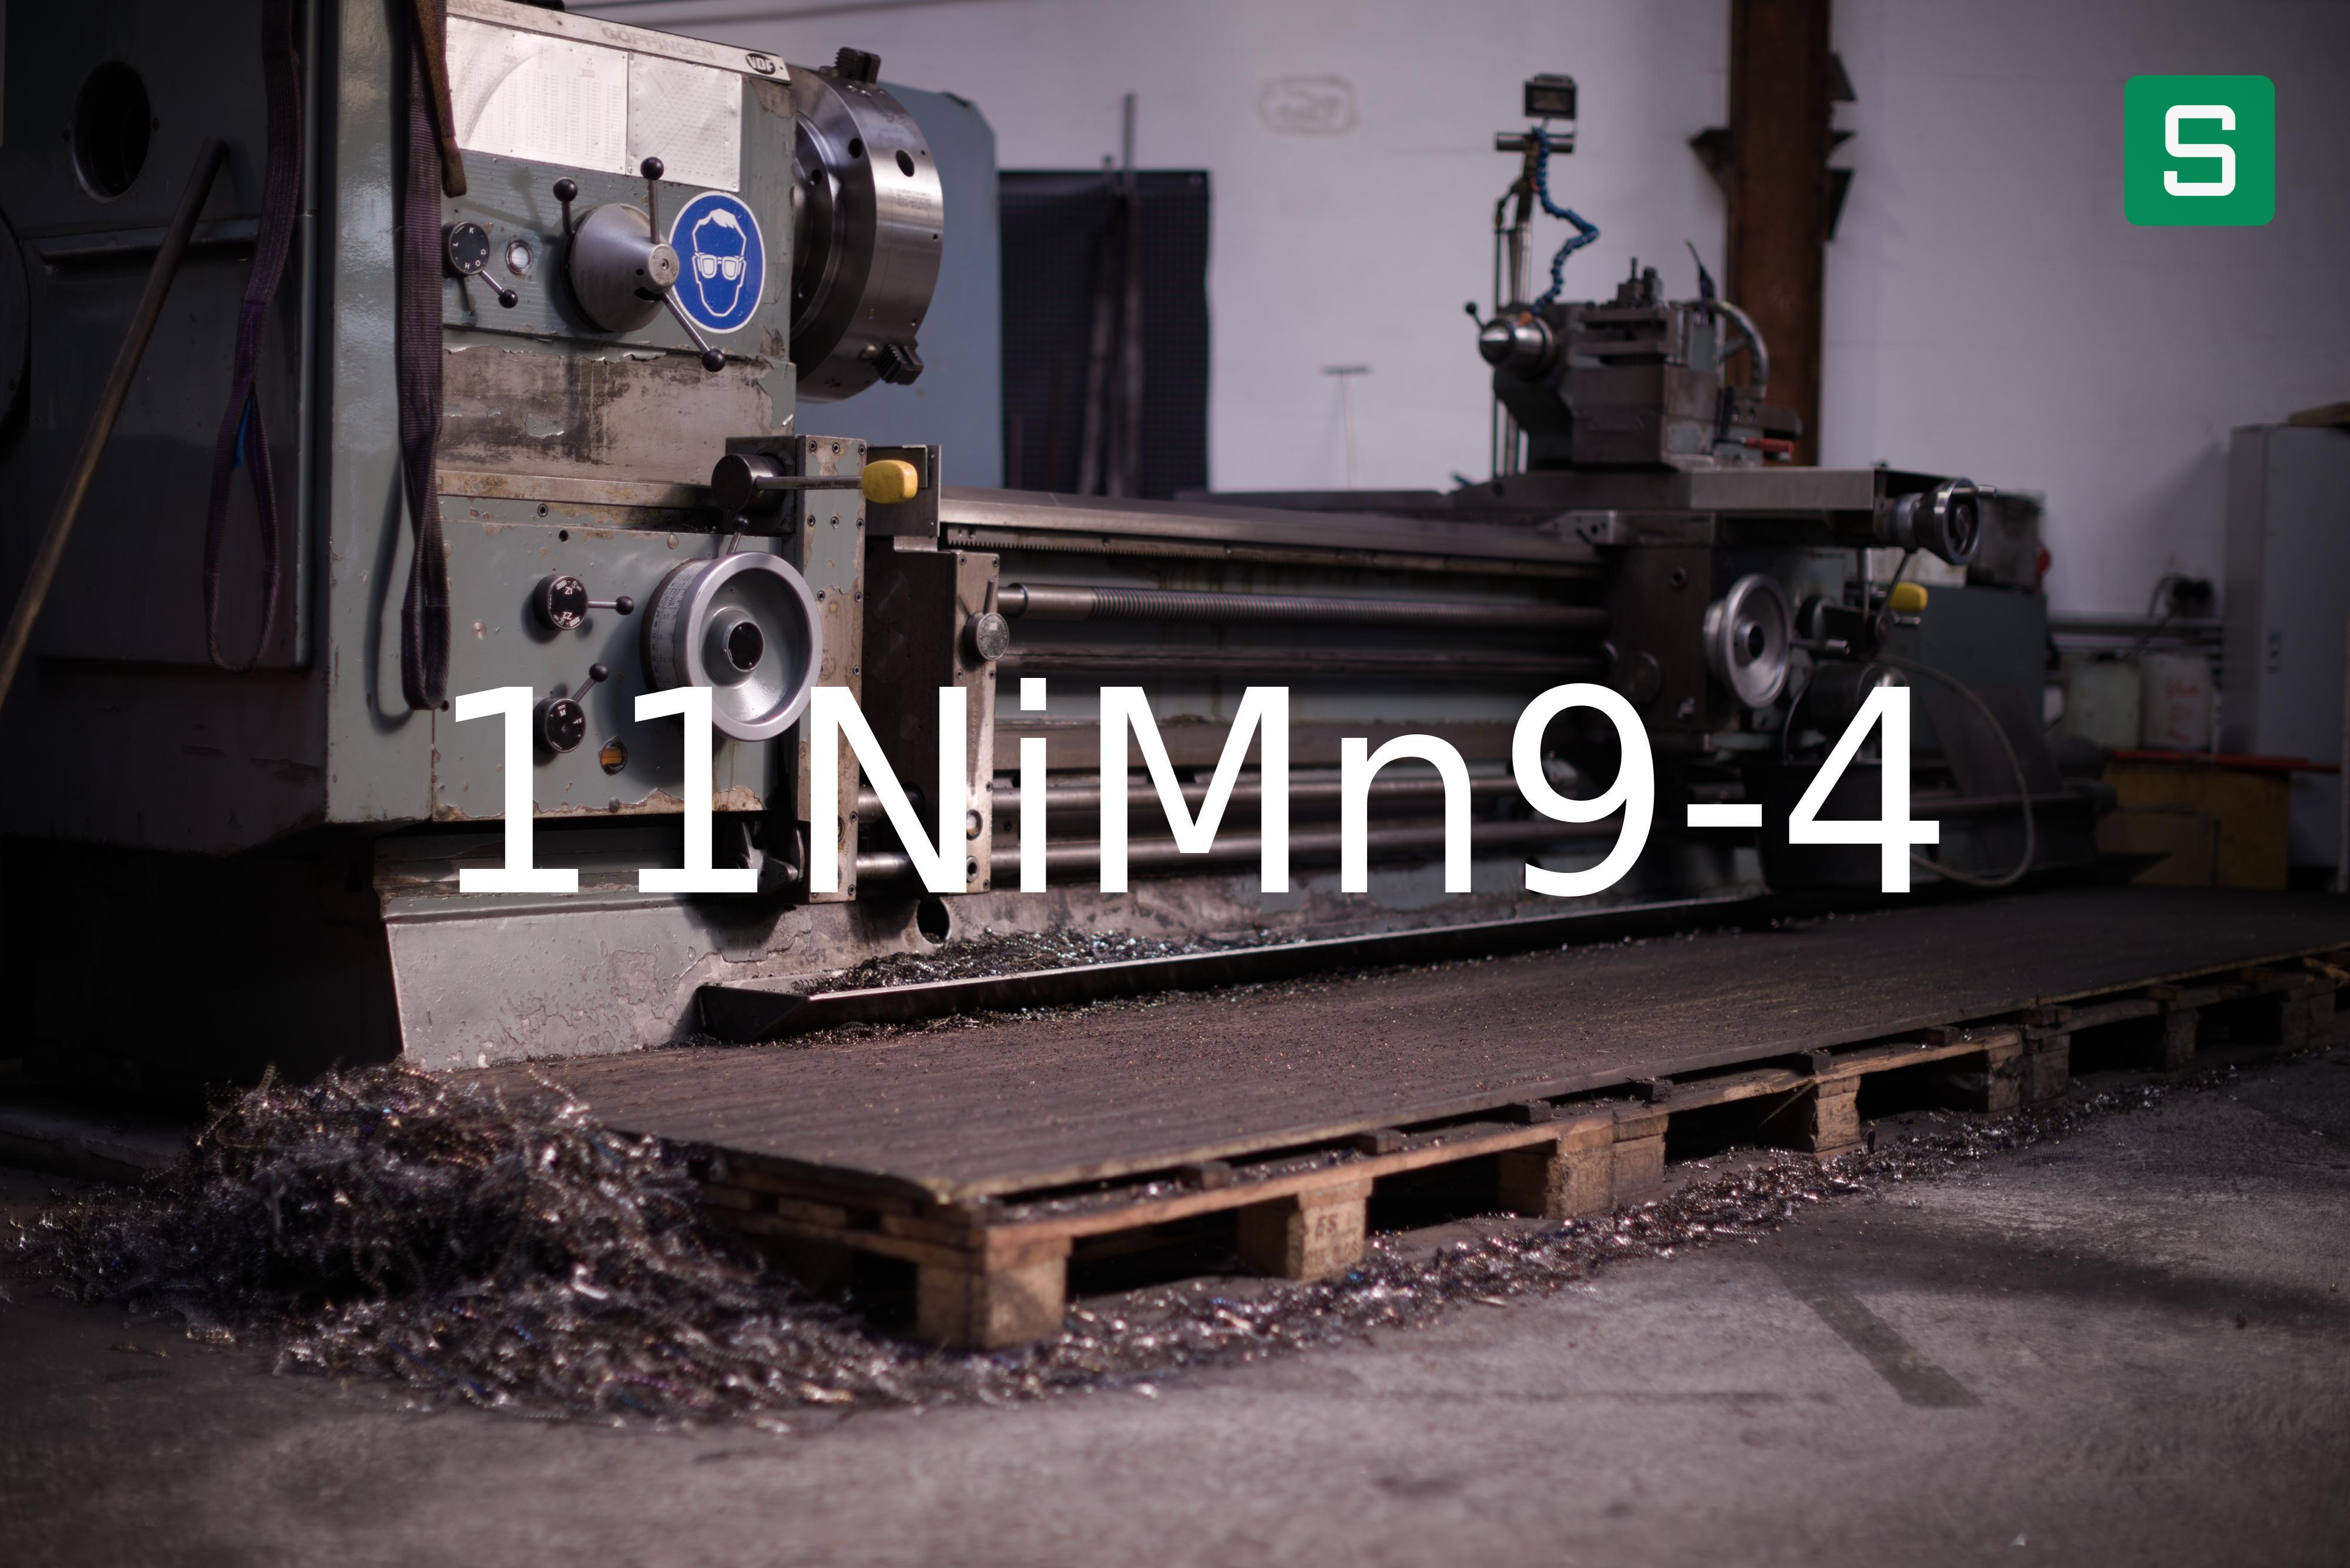 Steel Material: 11NiMn9-4